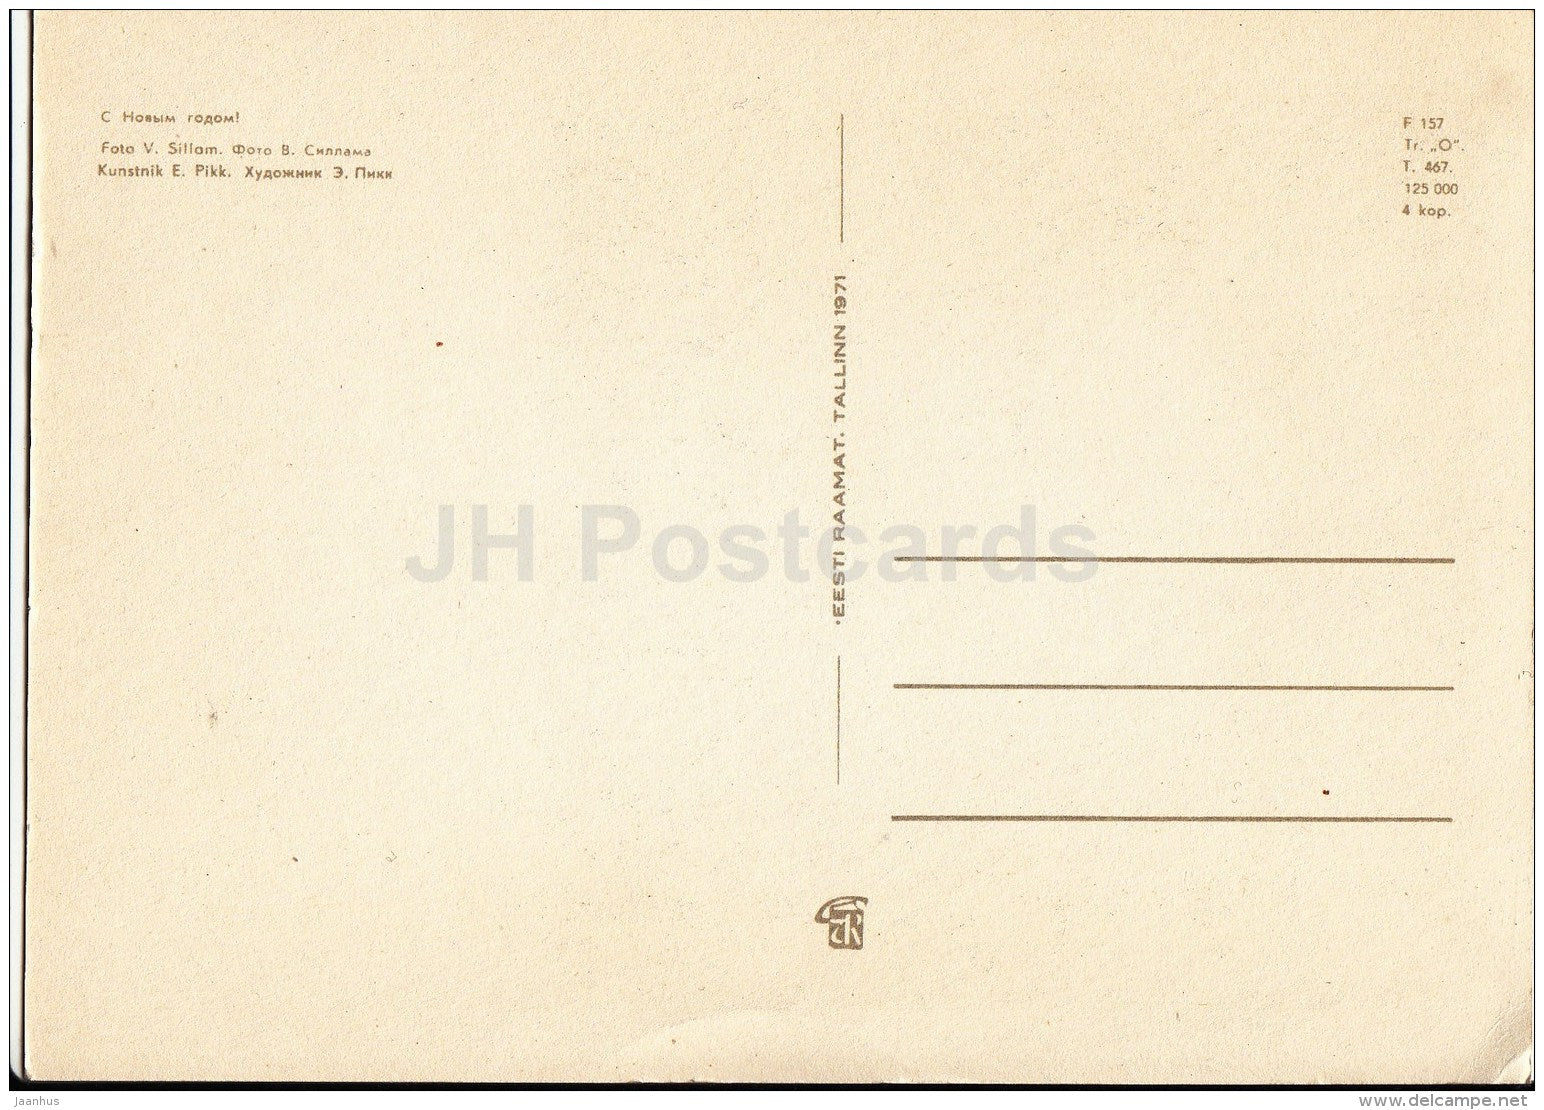 New Year Greeting card - clock - fir cones - 1971 - Estonia USSR - unused - JH Postcards